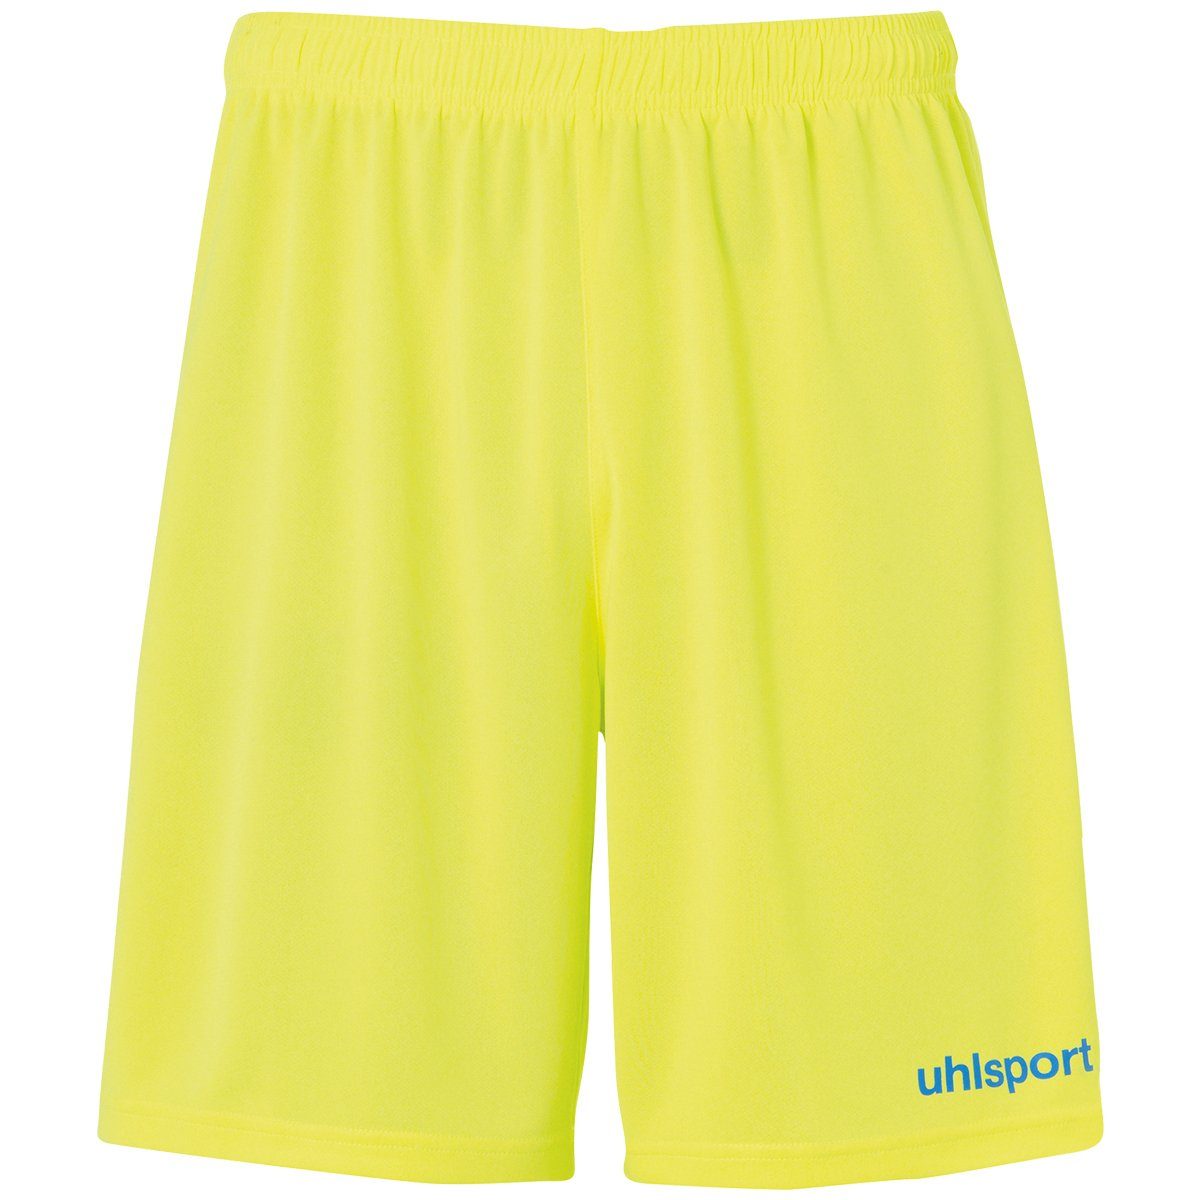 uhlsport Shorts uhlsport Shorts fluo gelb/radar blau